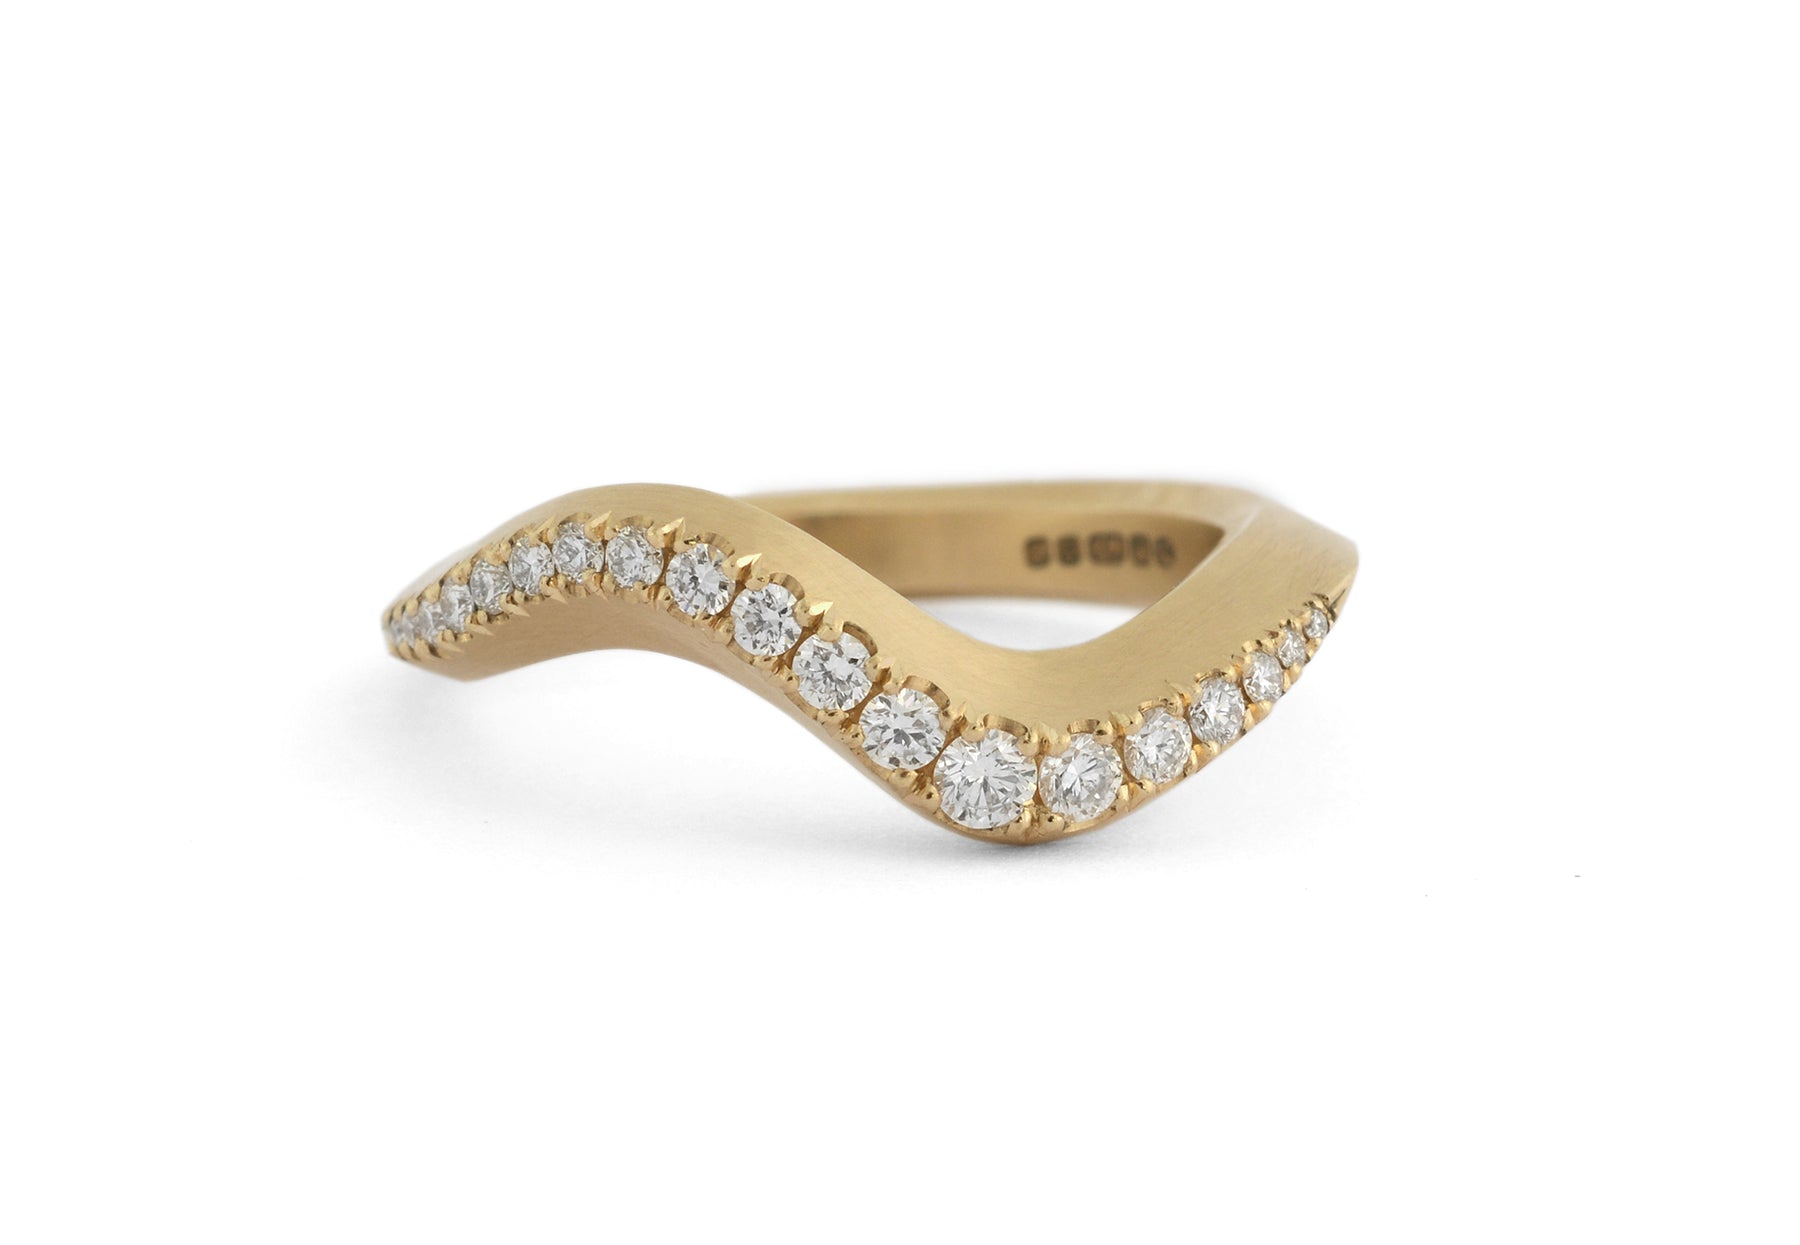 Arris carved white diamond castelle set yellow gold wedding ring